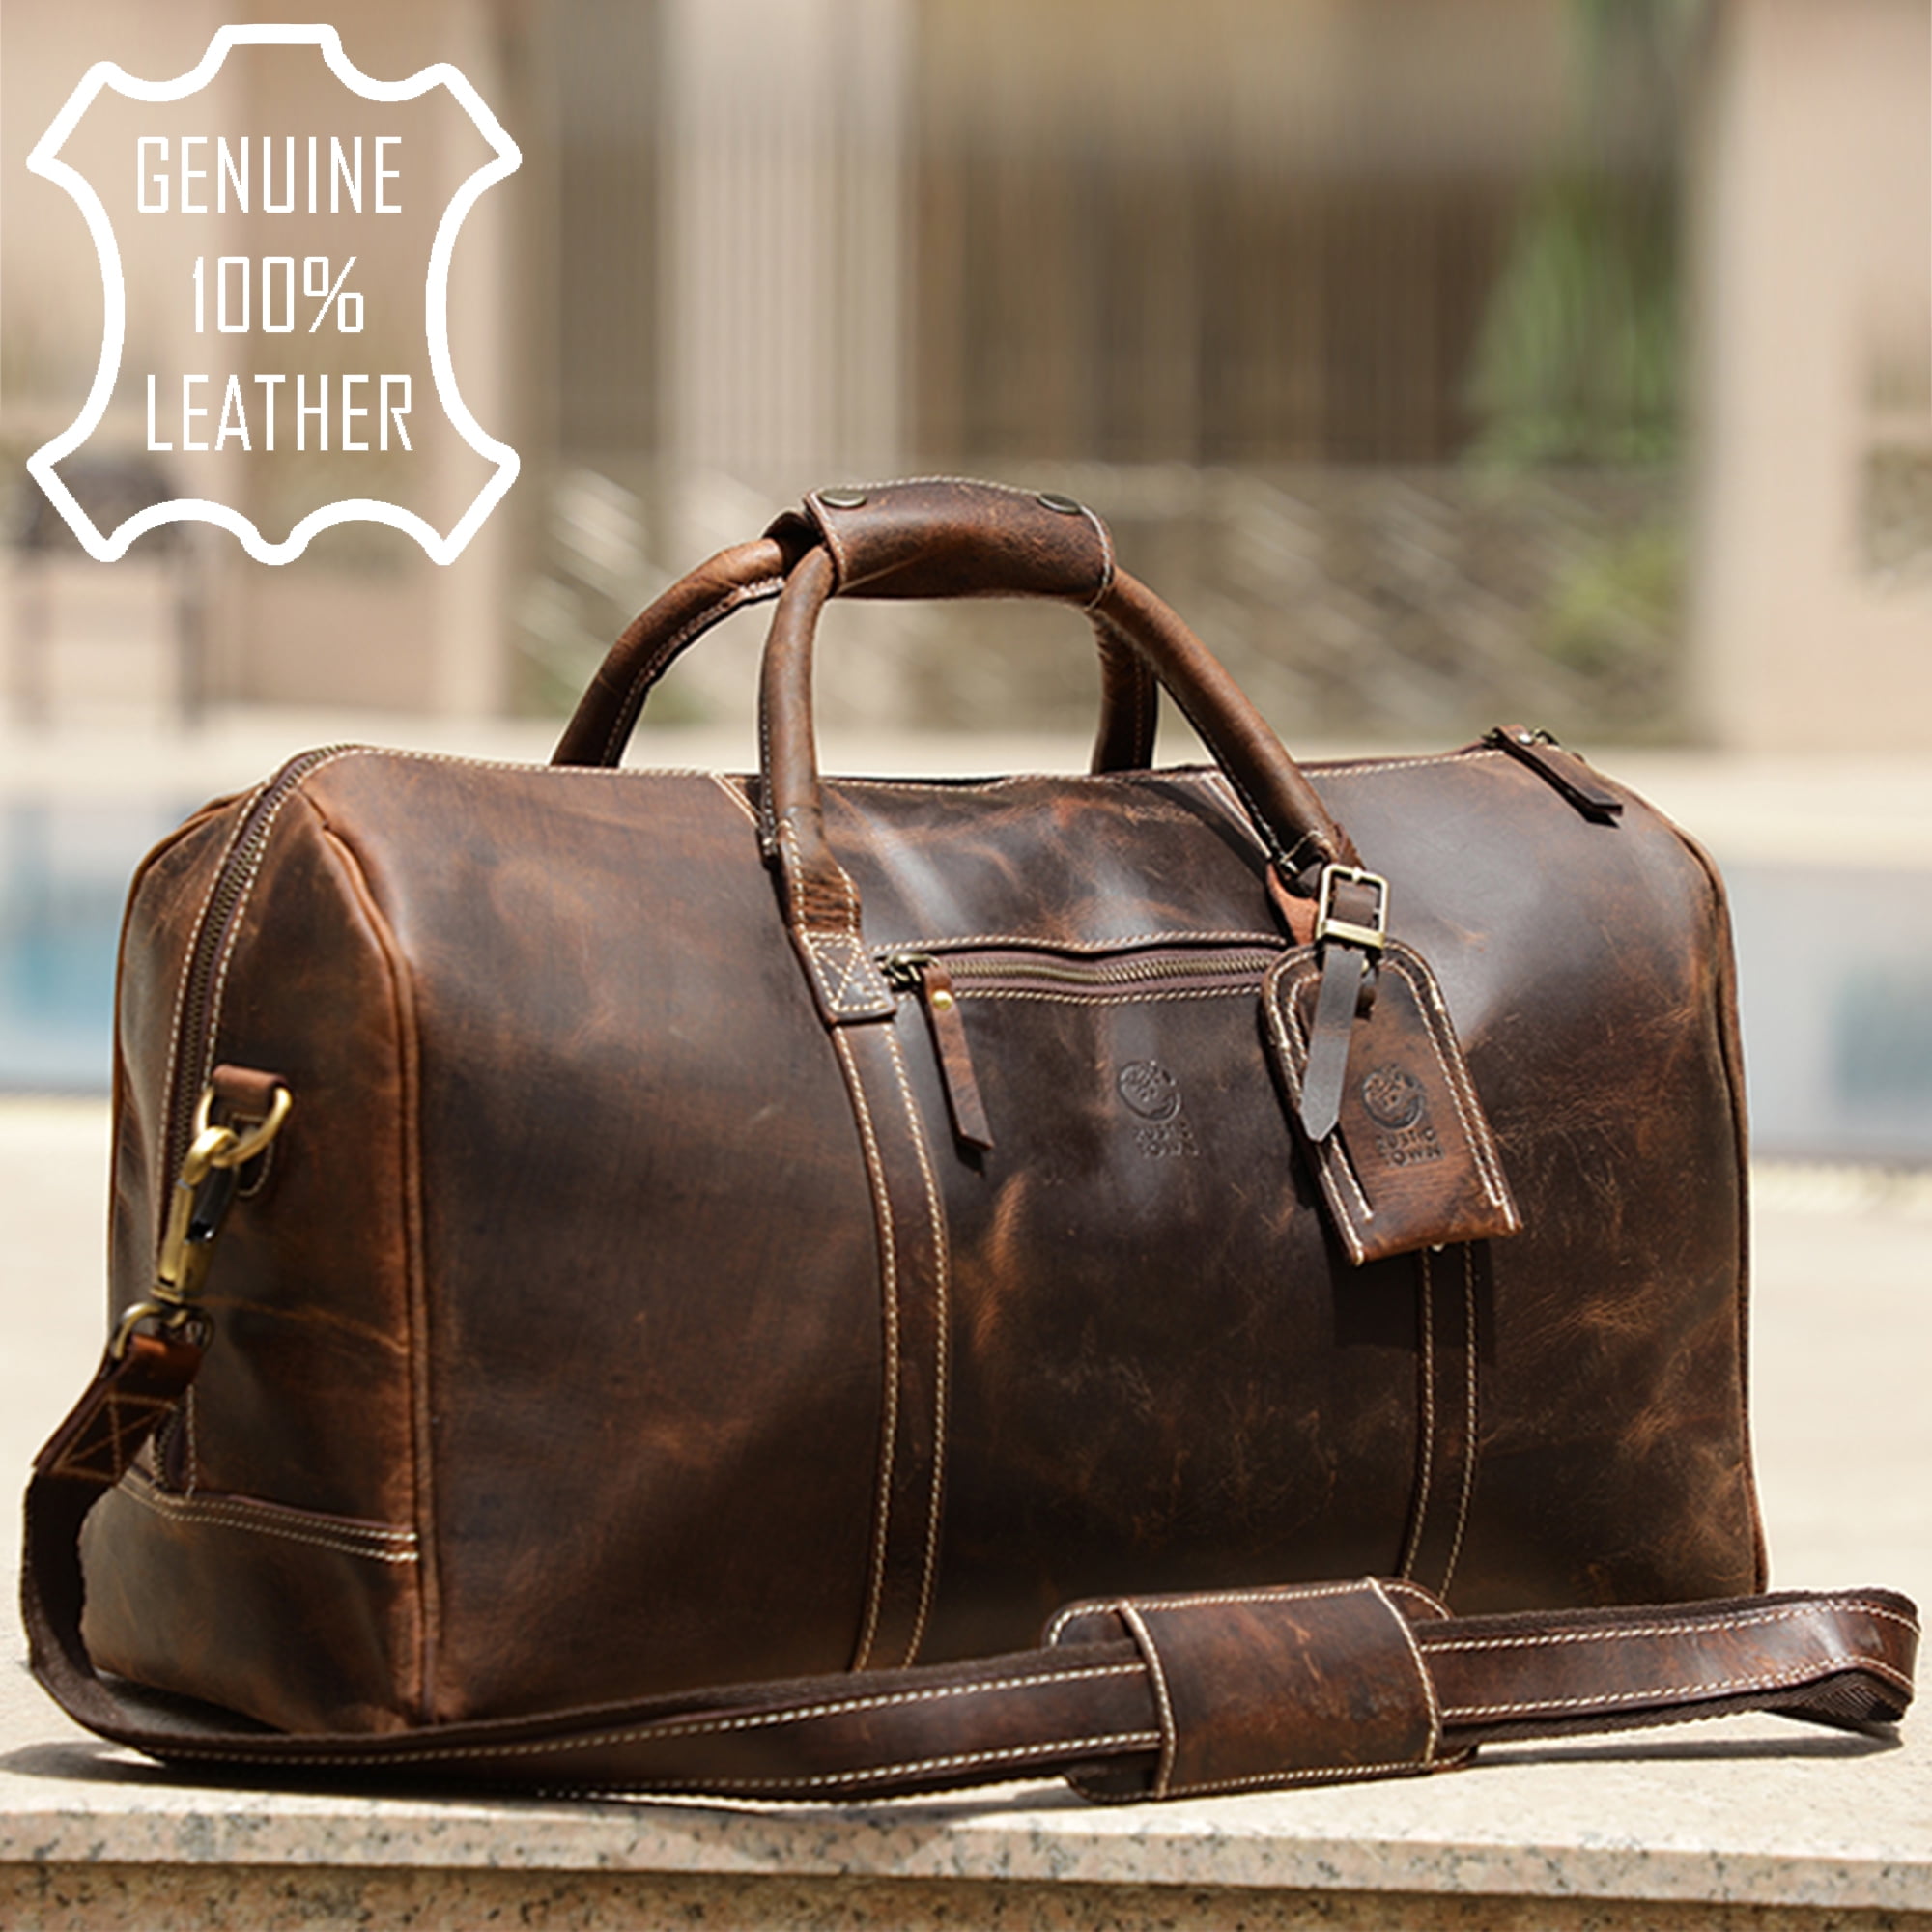 Genuine Vintage Leather Duffle Travel Overnight Weekend Gym Bag Luggage-6 